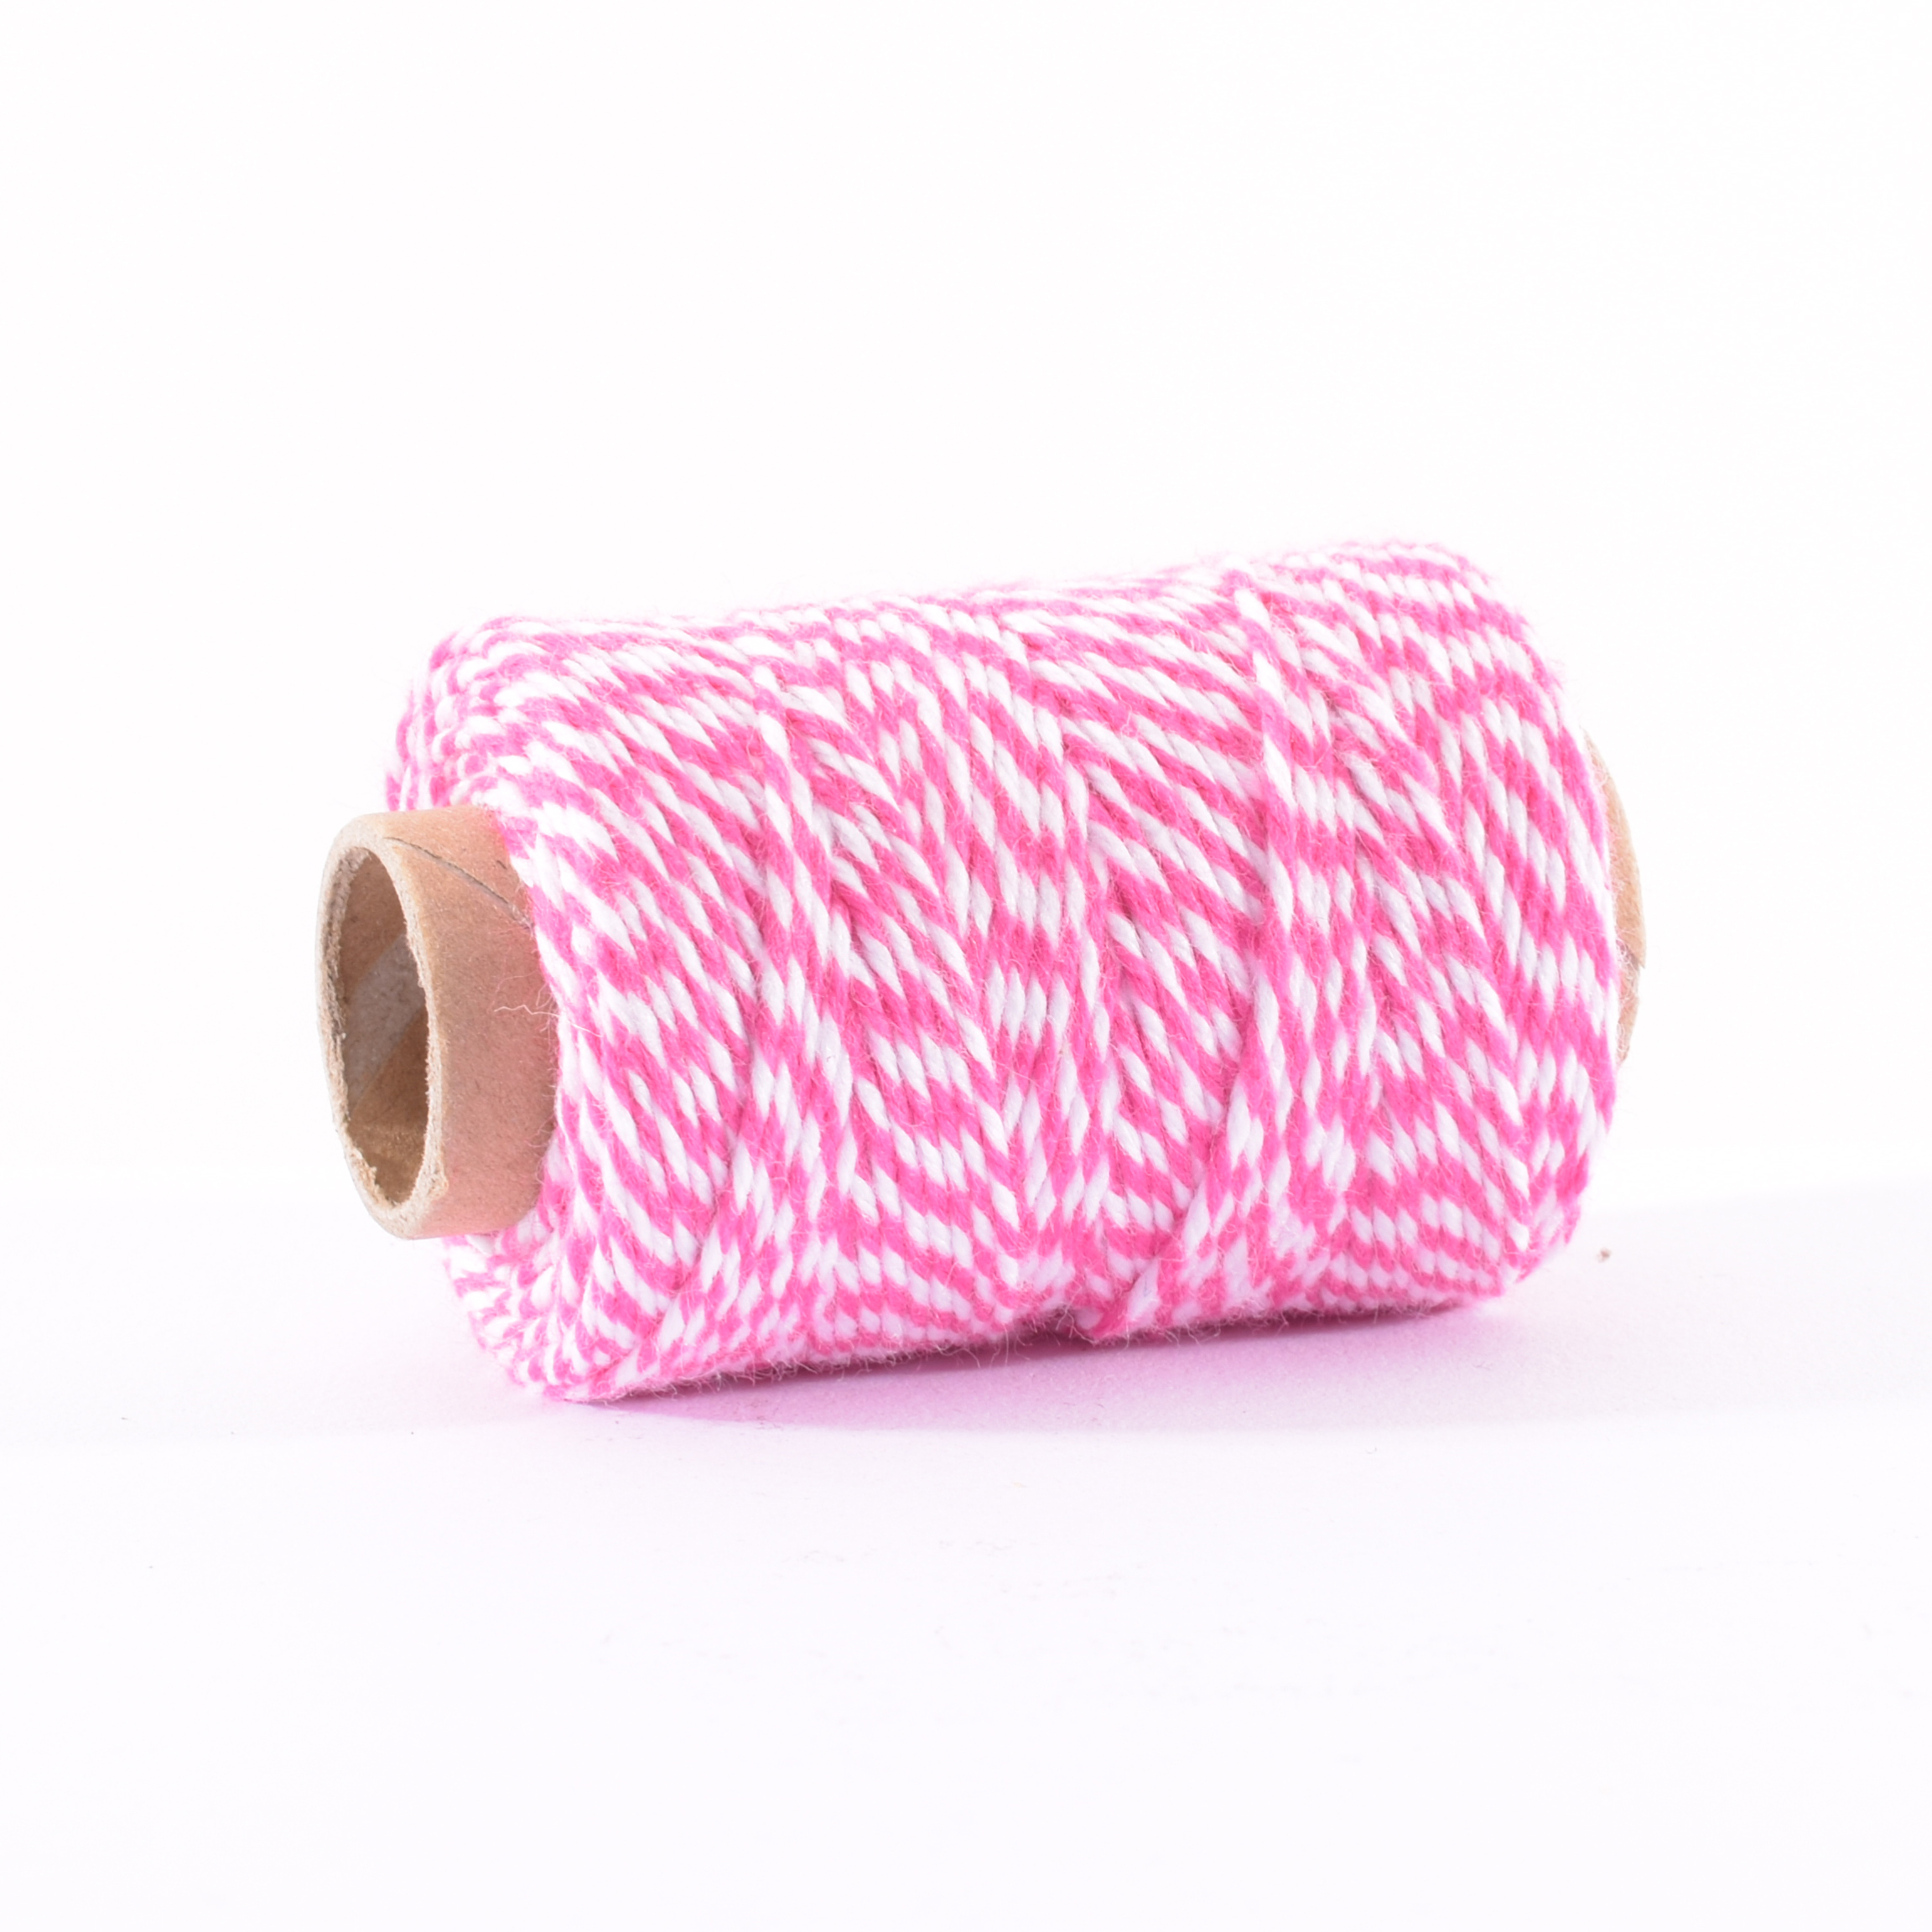 Vaessen Creative • Bakers Twine 45m Pink-White 1mm wire